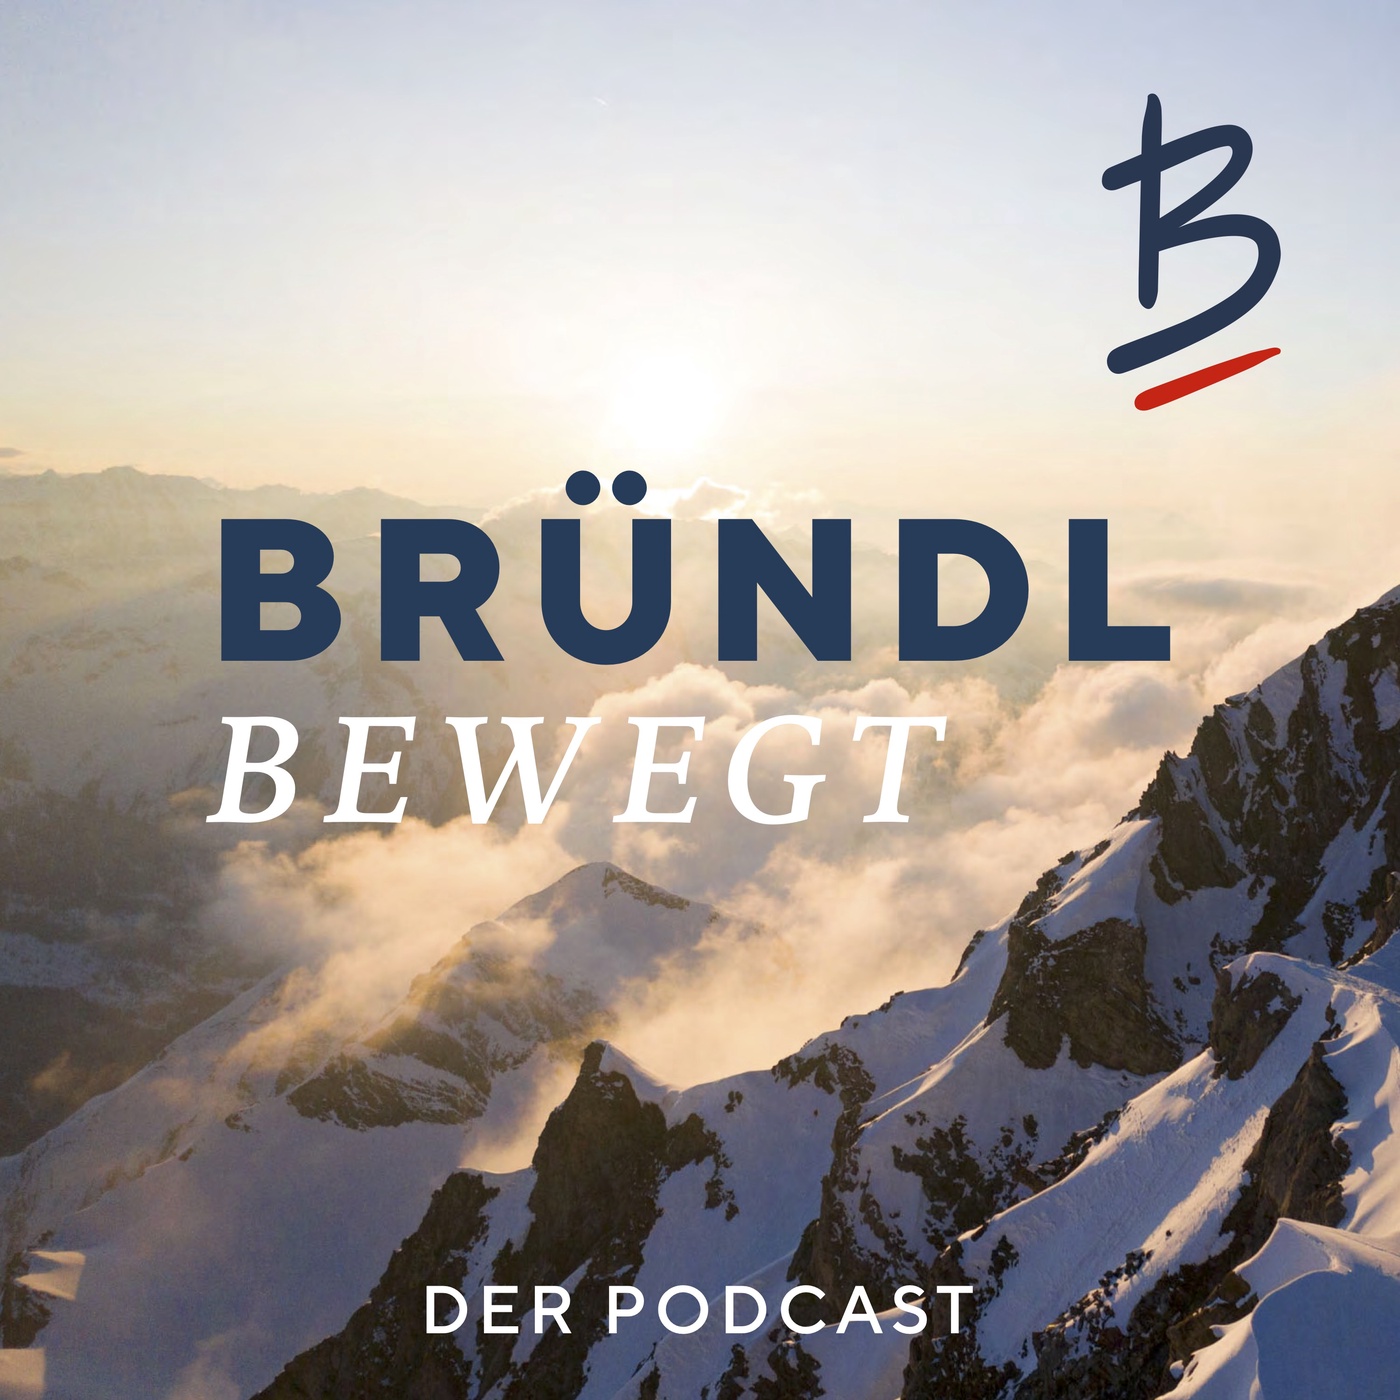 Bründl Bewegt - Der Podcast